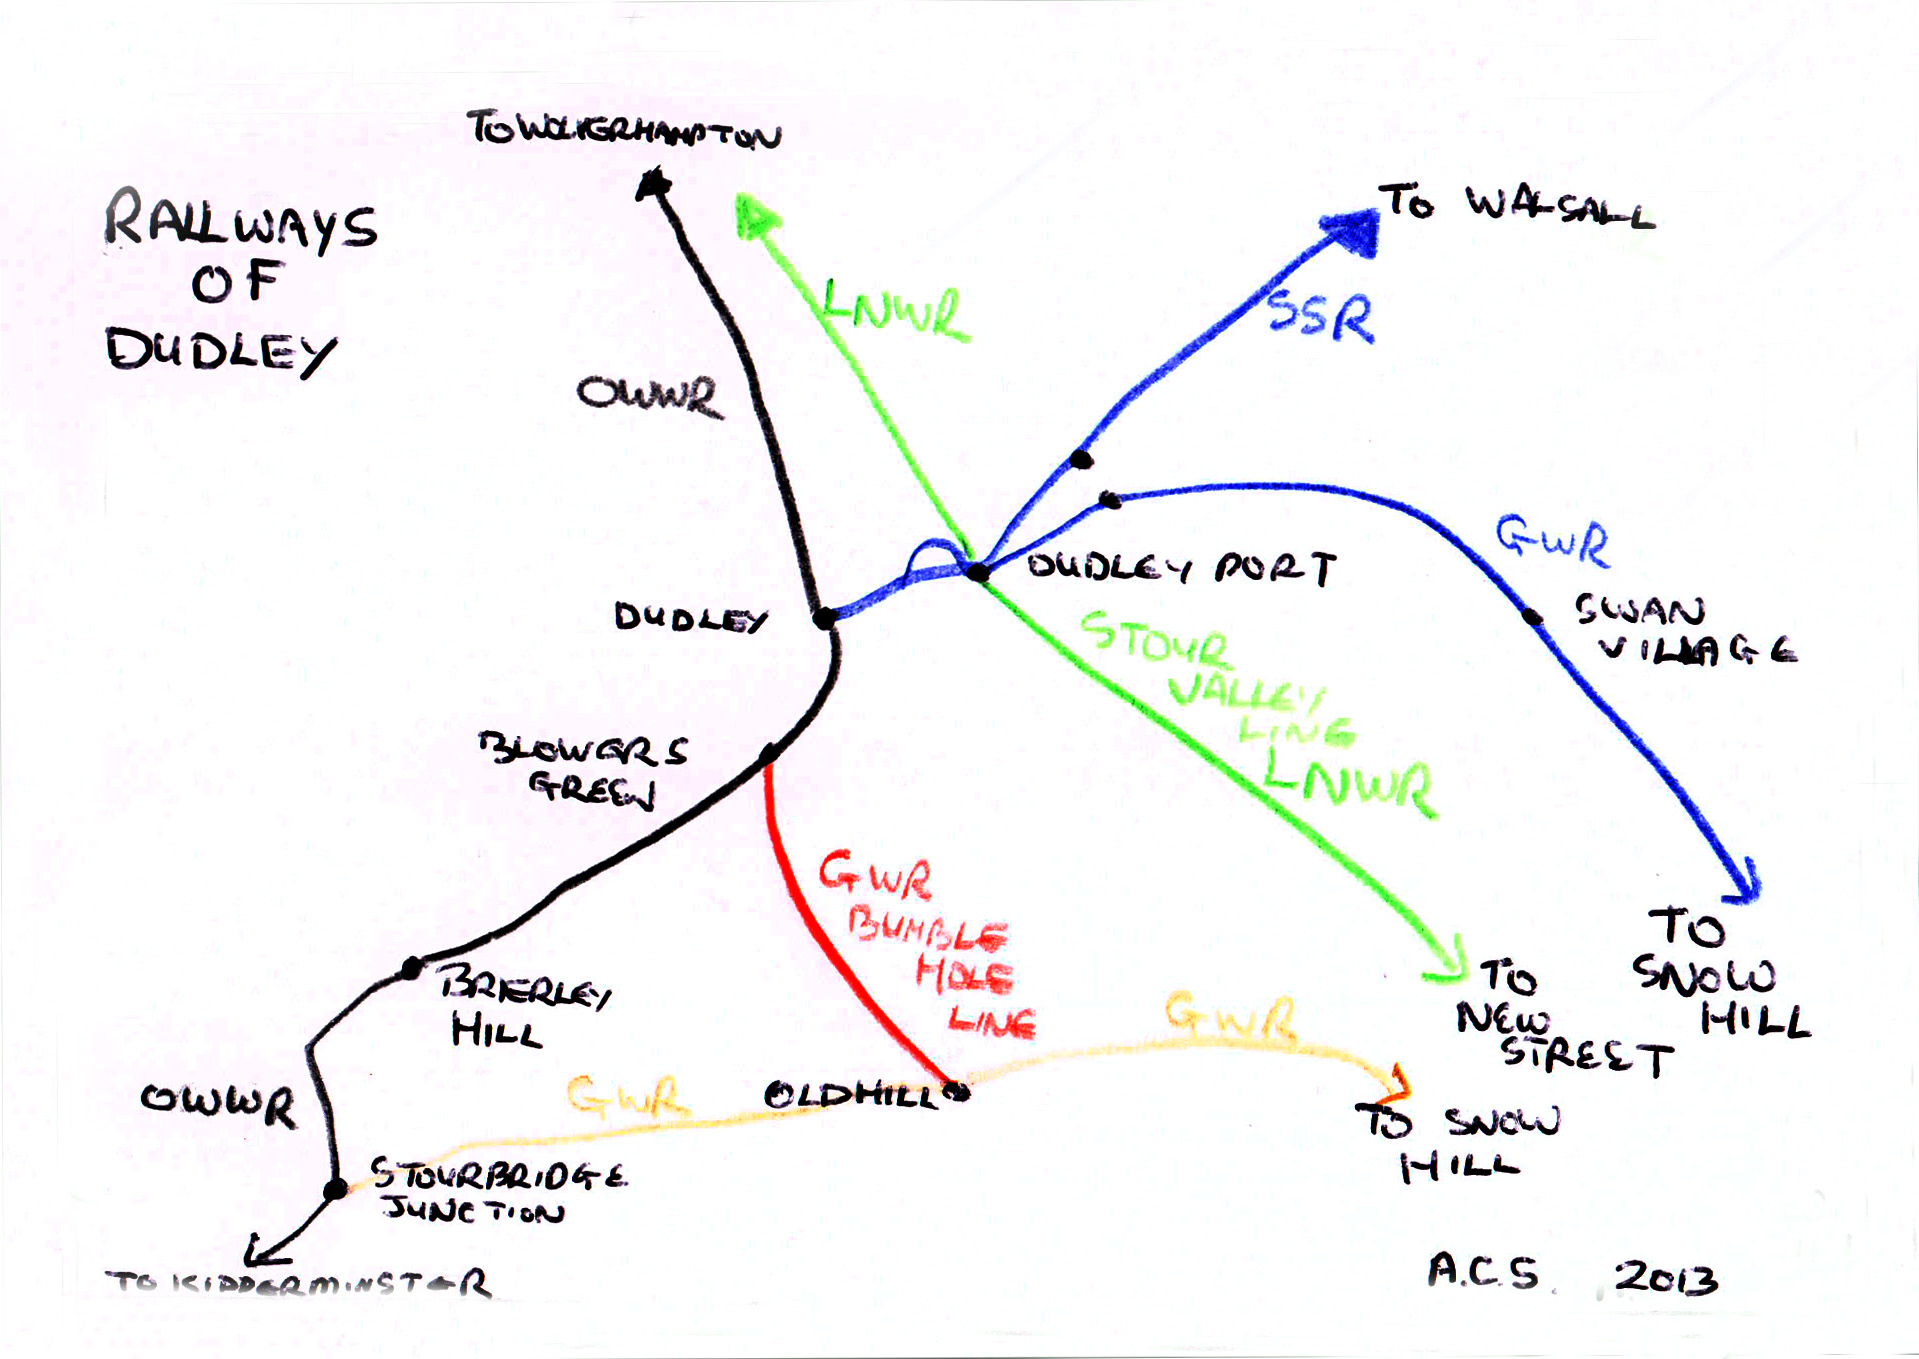 Railways of Dudley Sketch Map